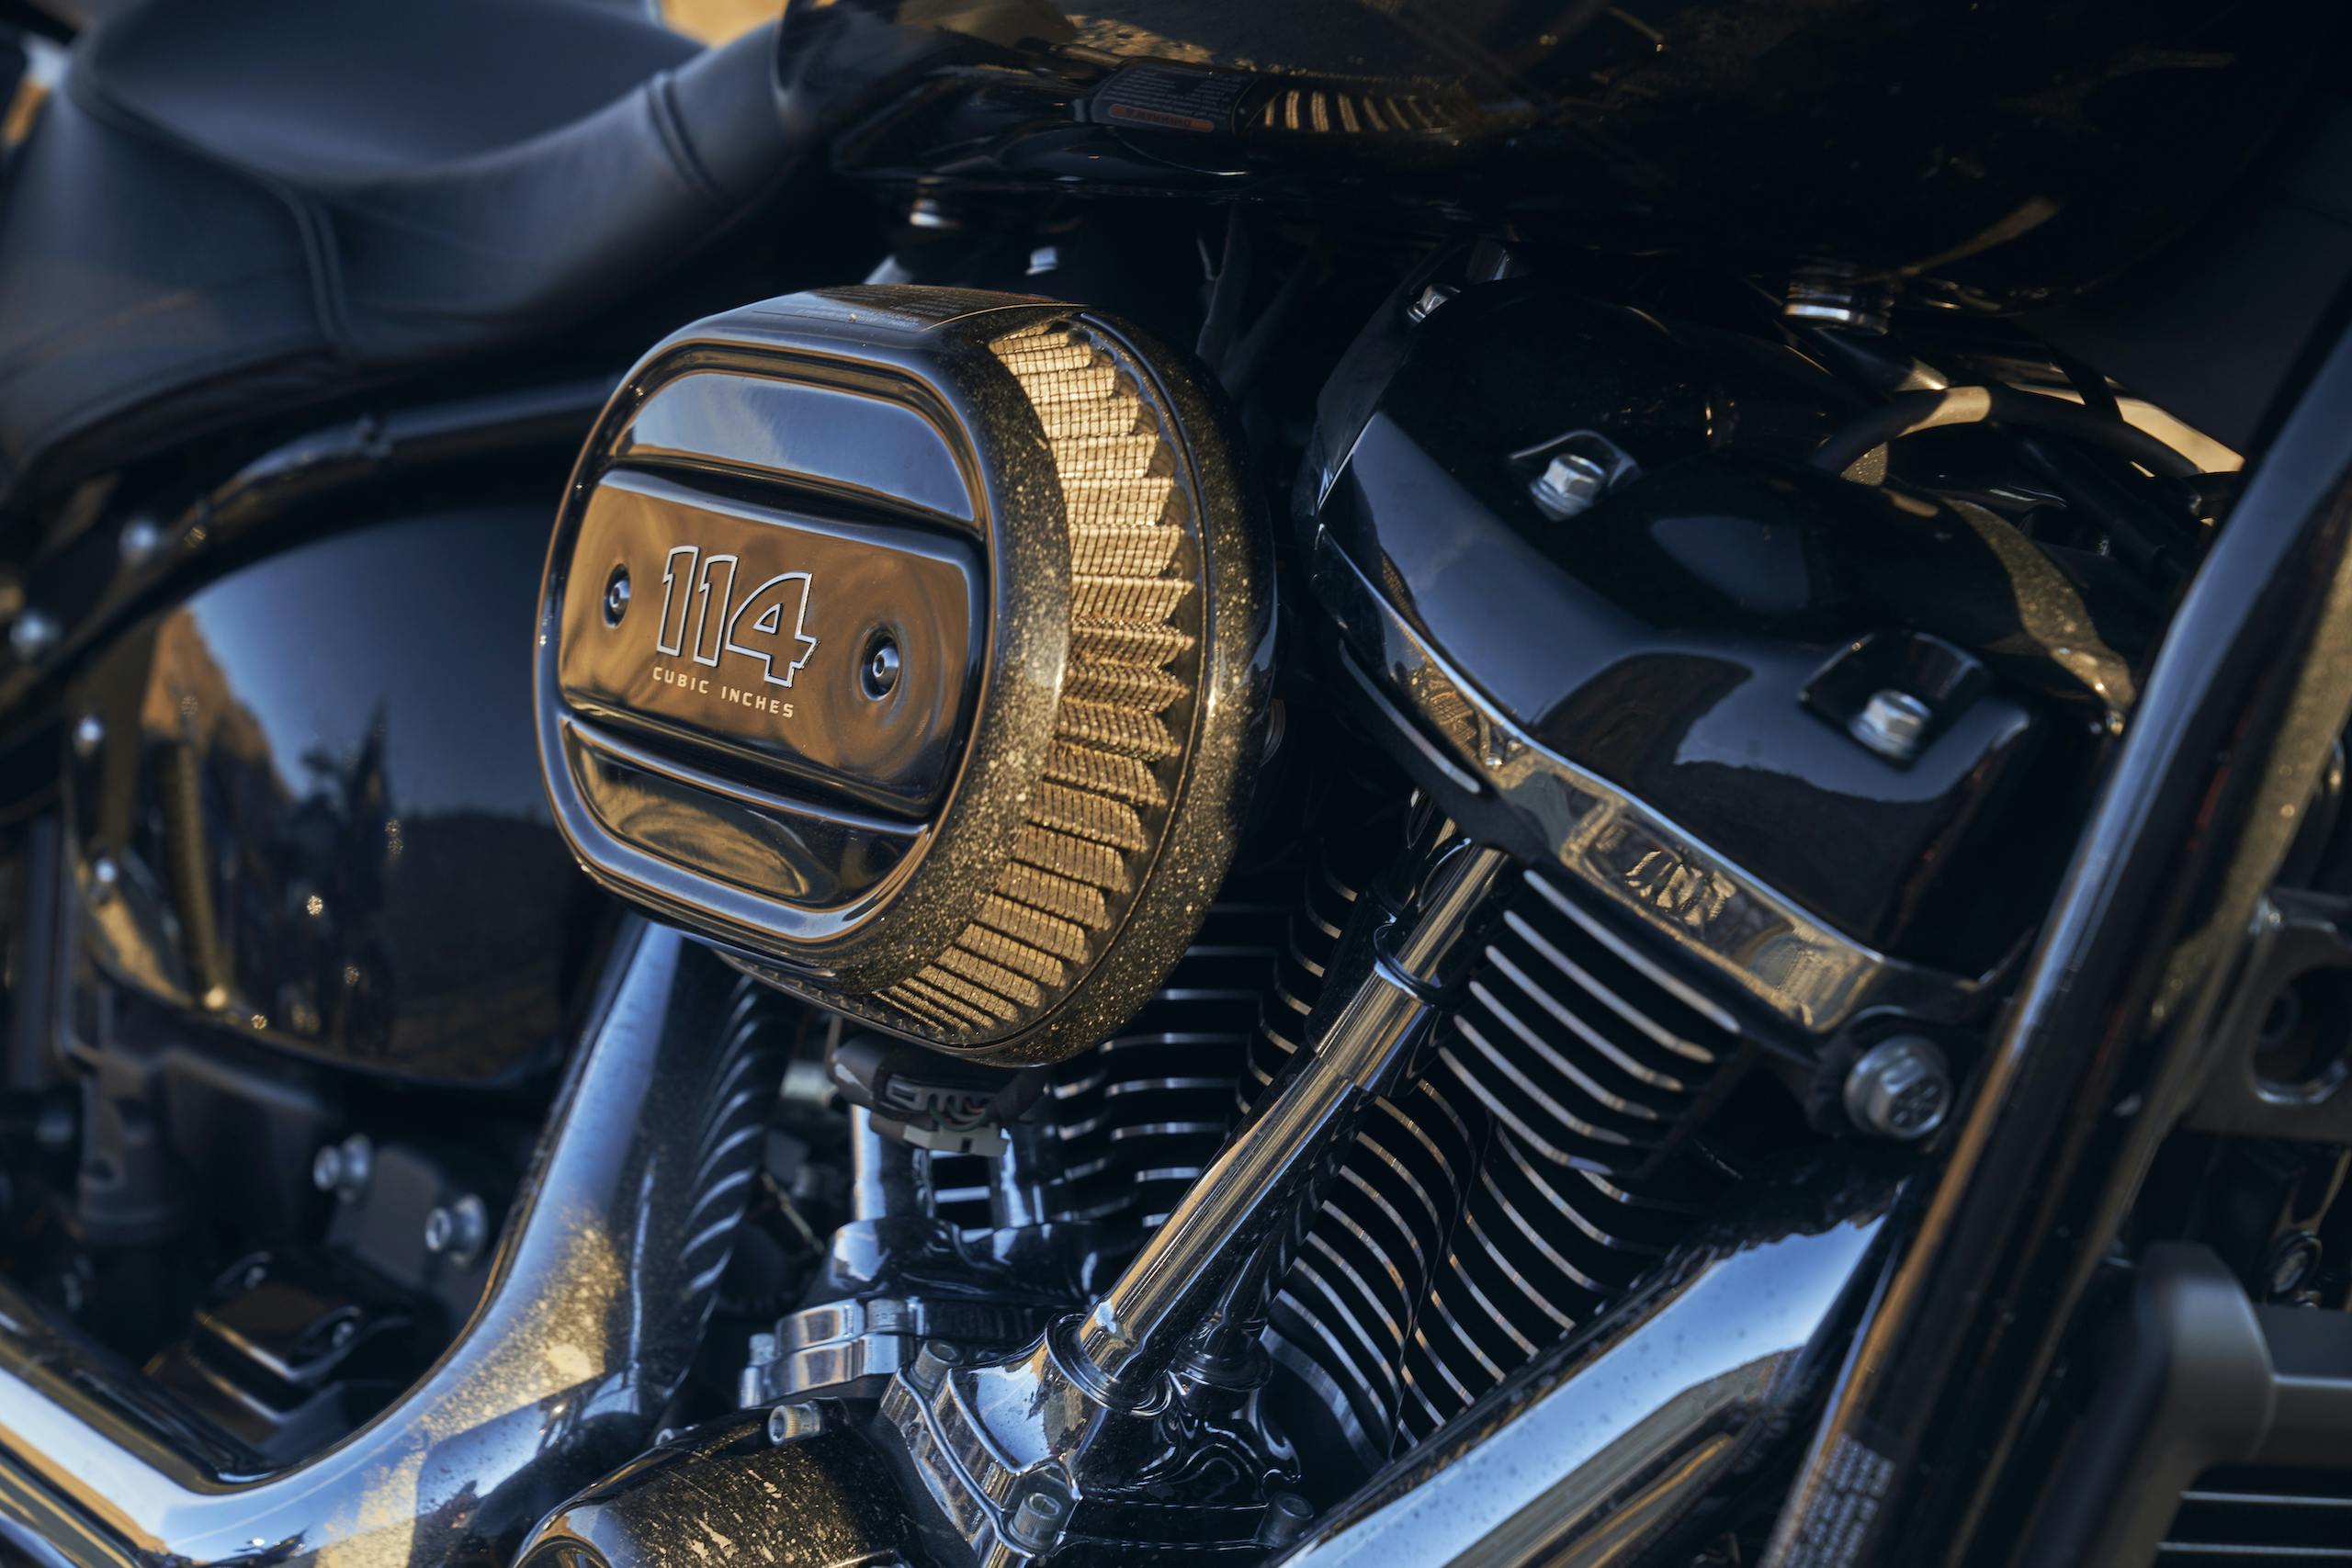 Harley heritage classic engine